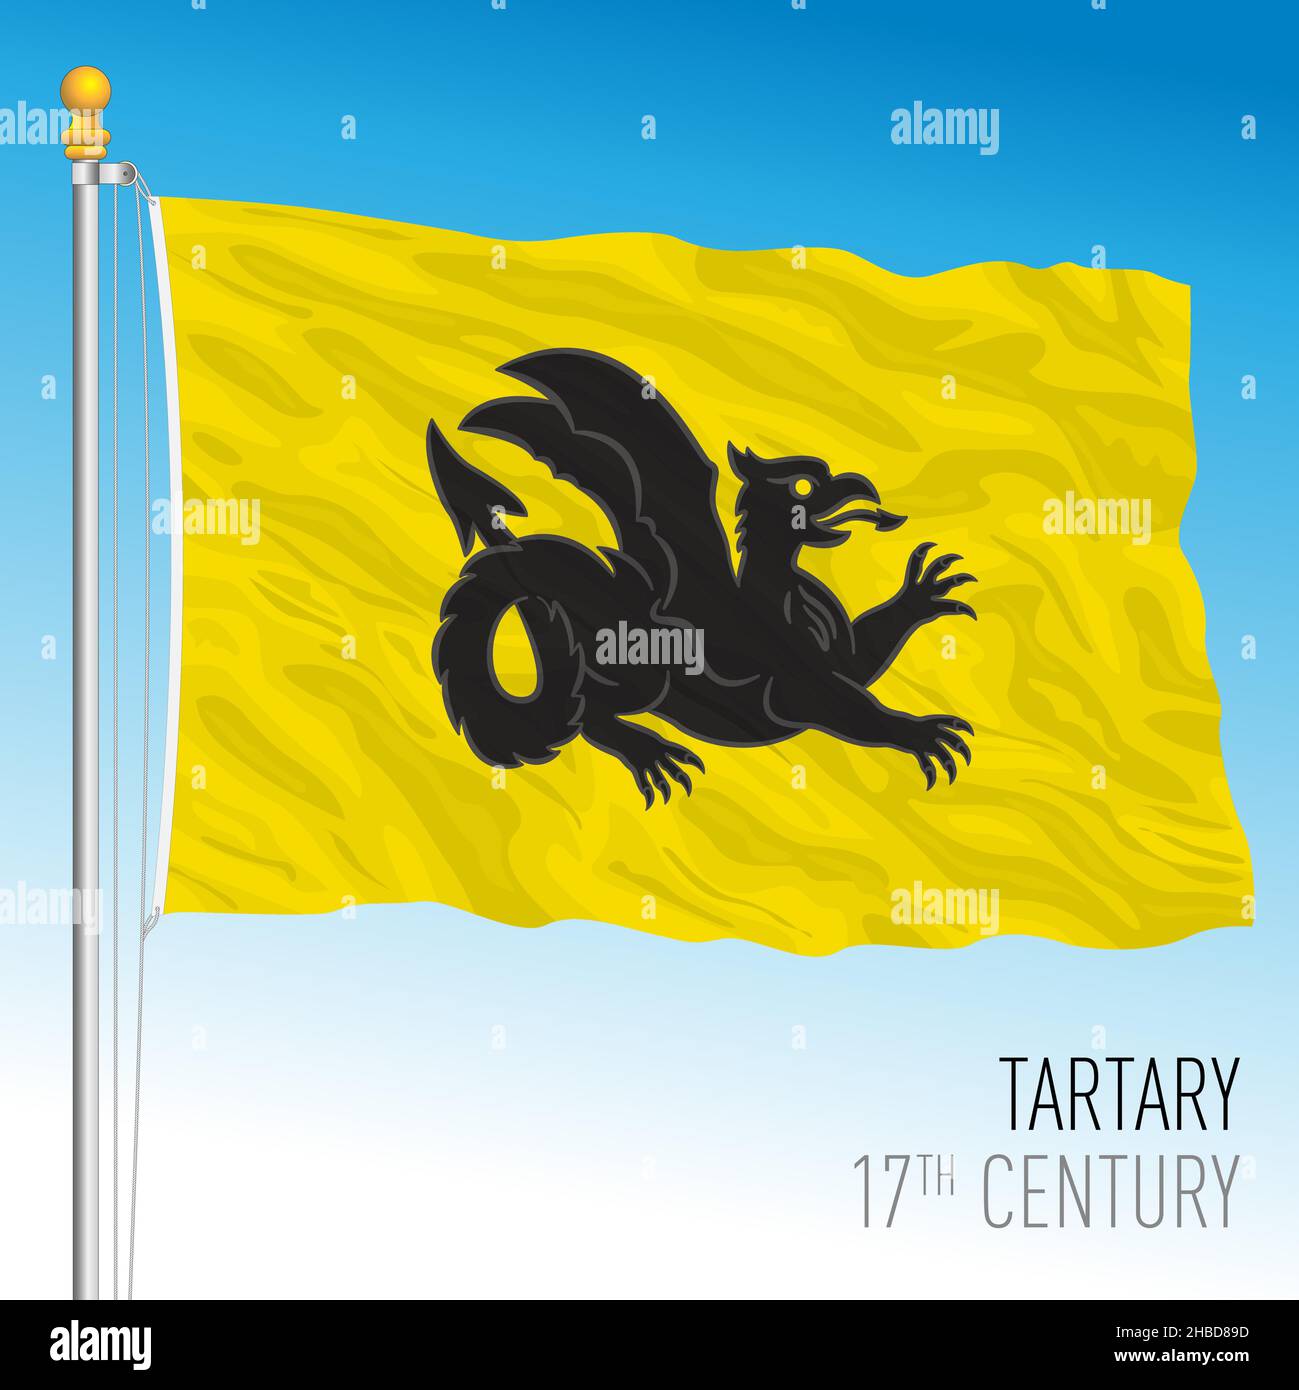 Great Tartary historical flag, 17th century, eurasia, vector illustration Stock Vector